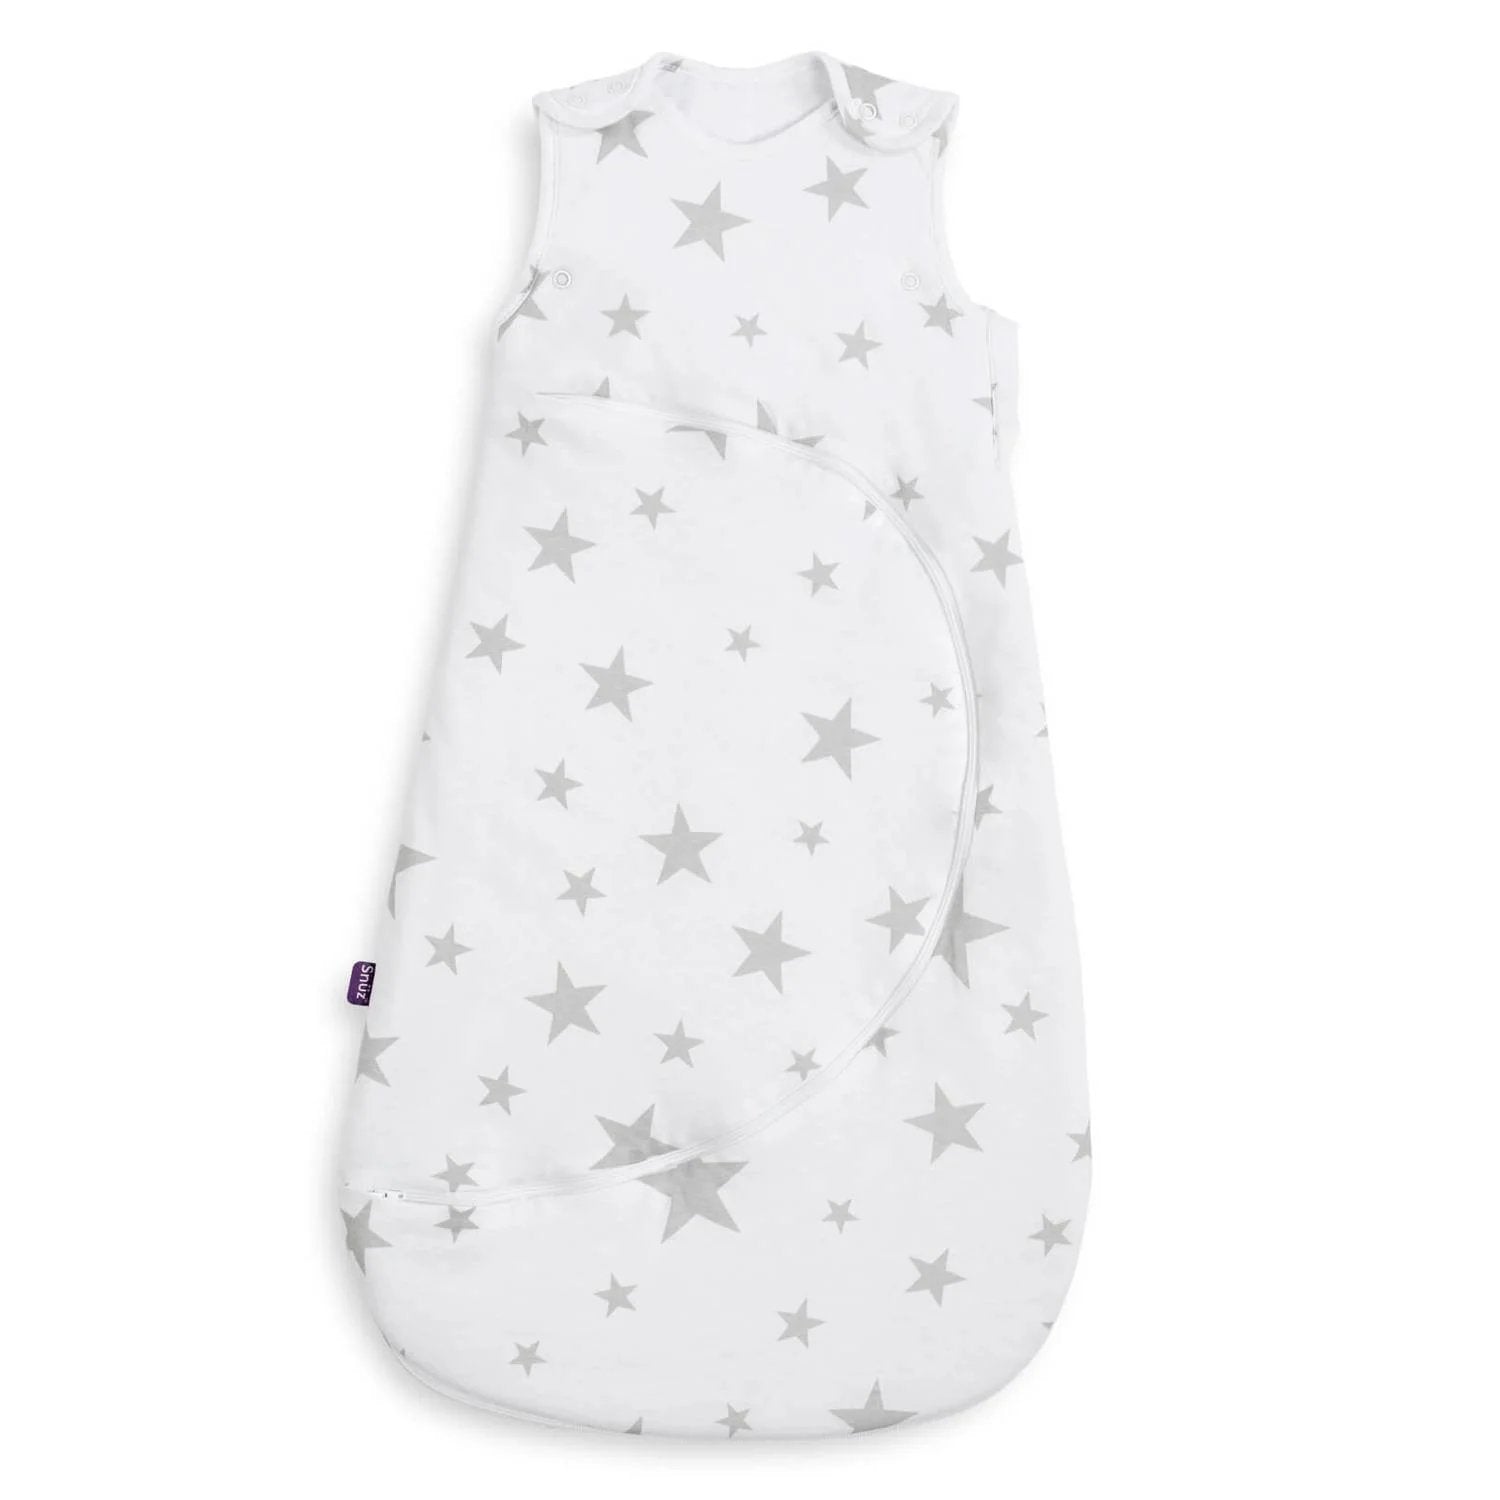 Snuzpouch Sleeping Bag, 2.5 Tog - White Star, 0-6m Grey